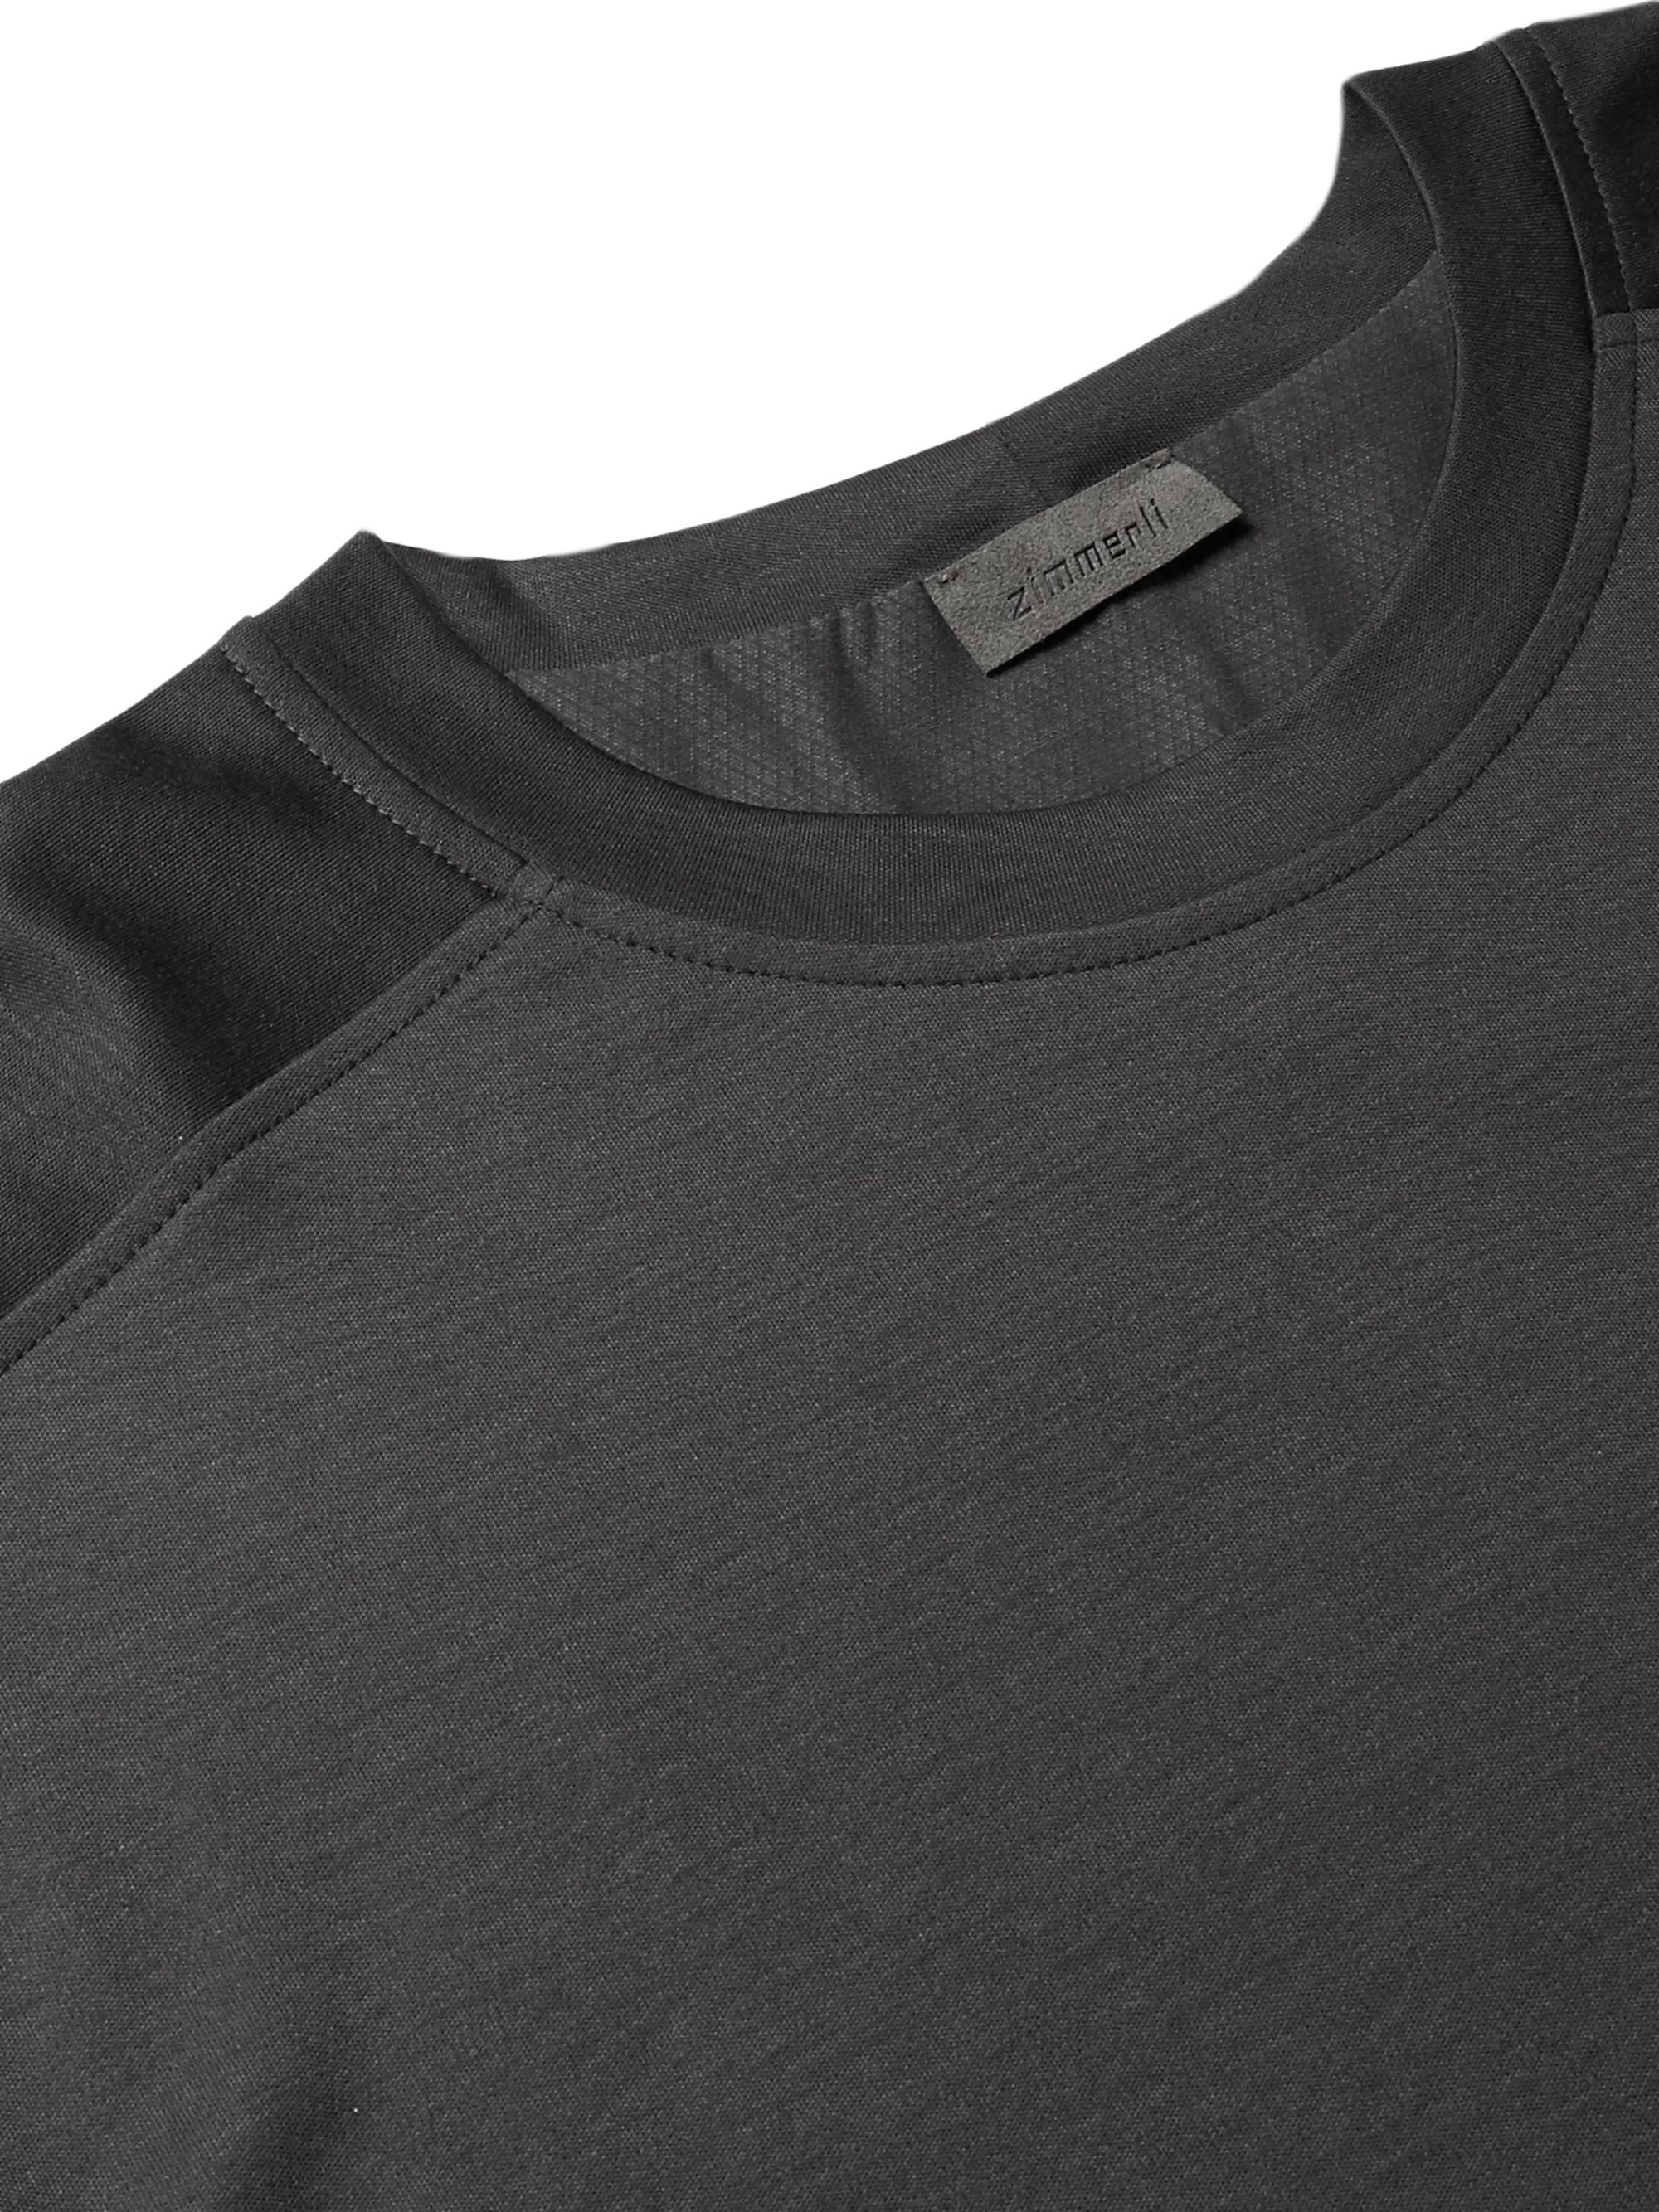 Dark gray Cotton and Modal-Blend Pyjama T-Shirt | ZIMMERLI | MR PORTER